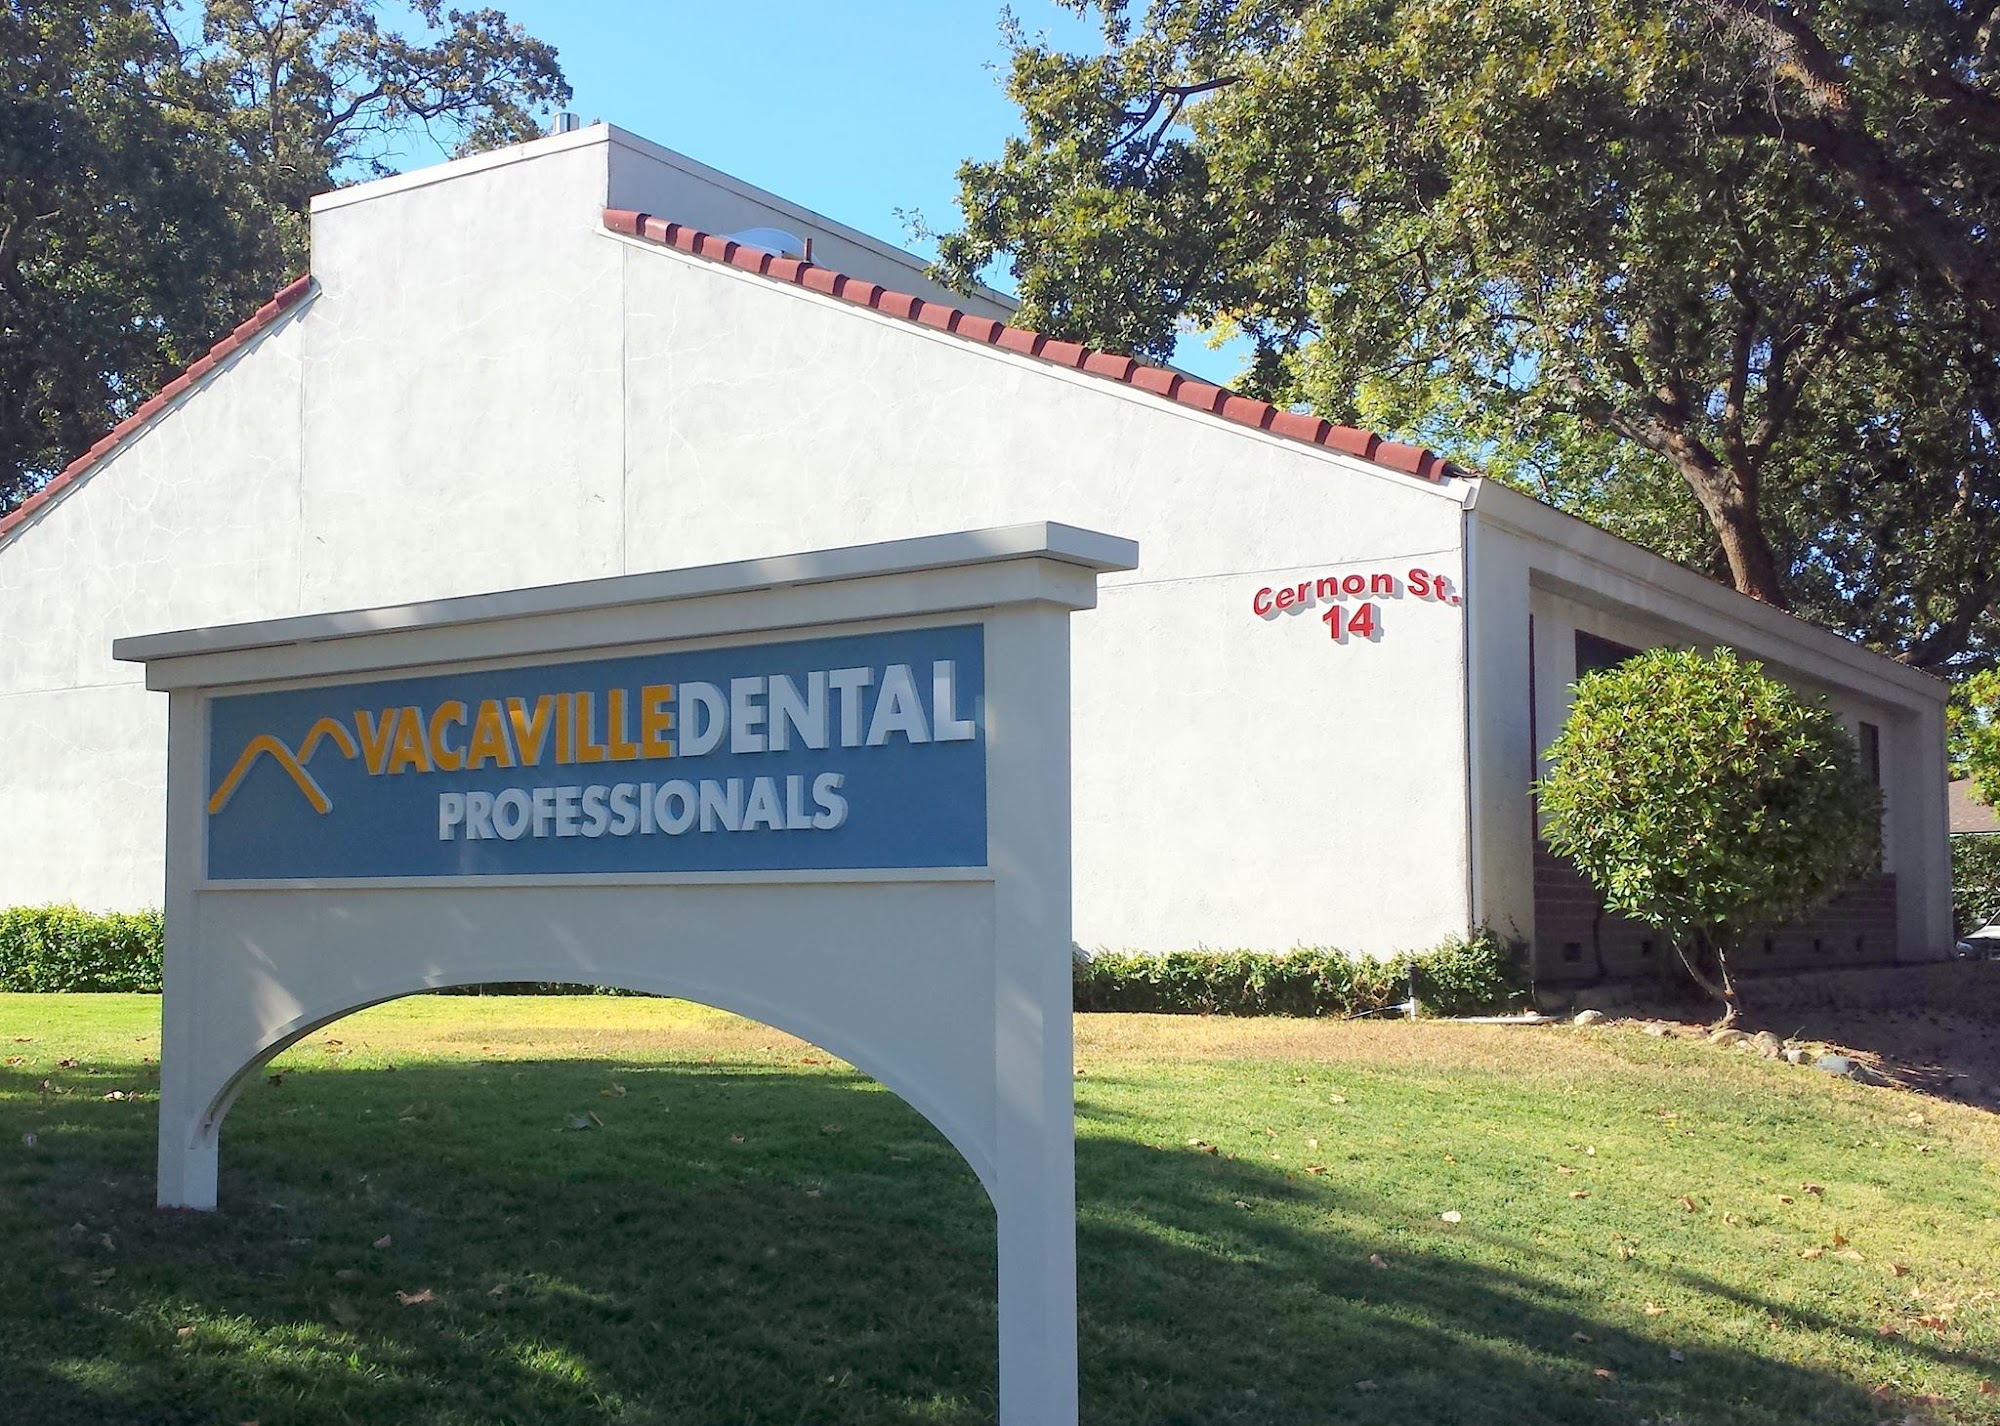 Vacaville Dental Professionals